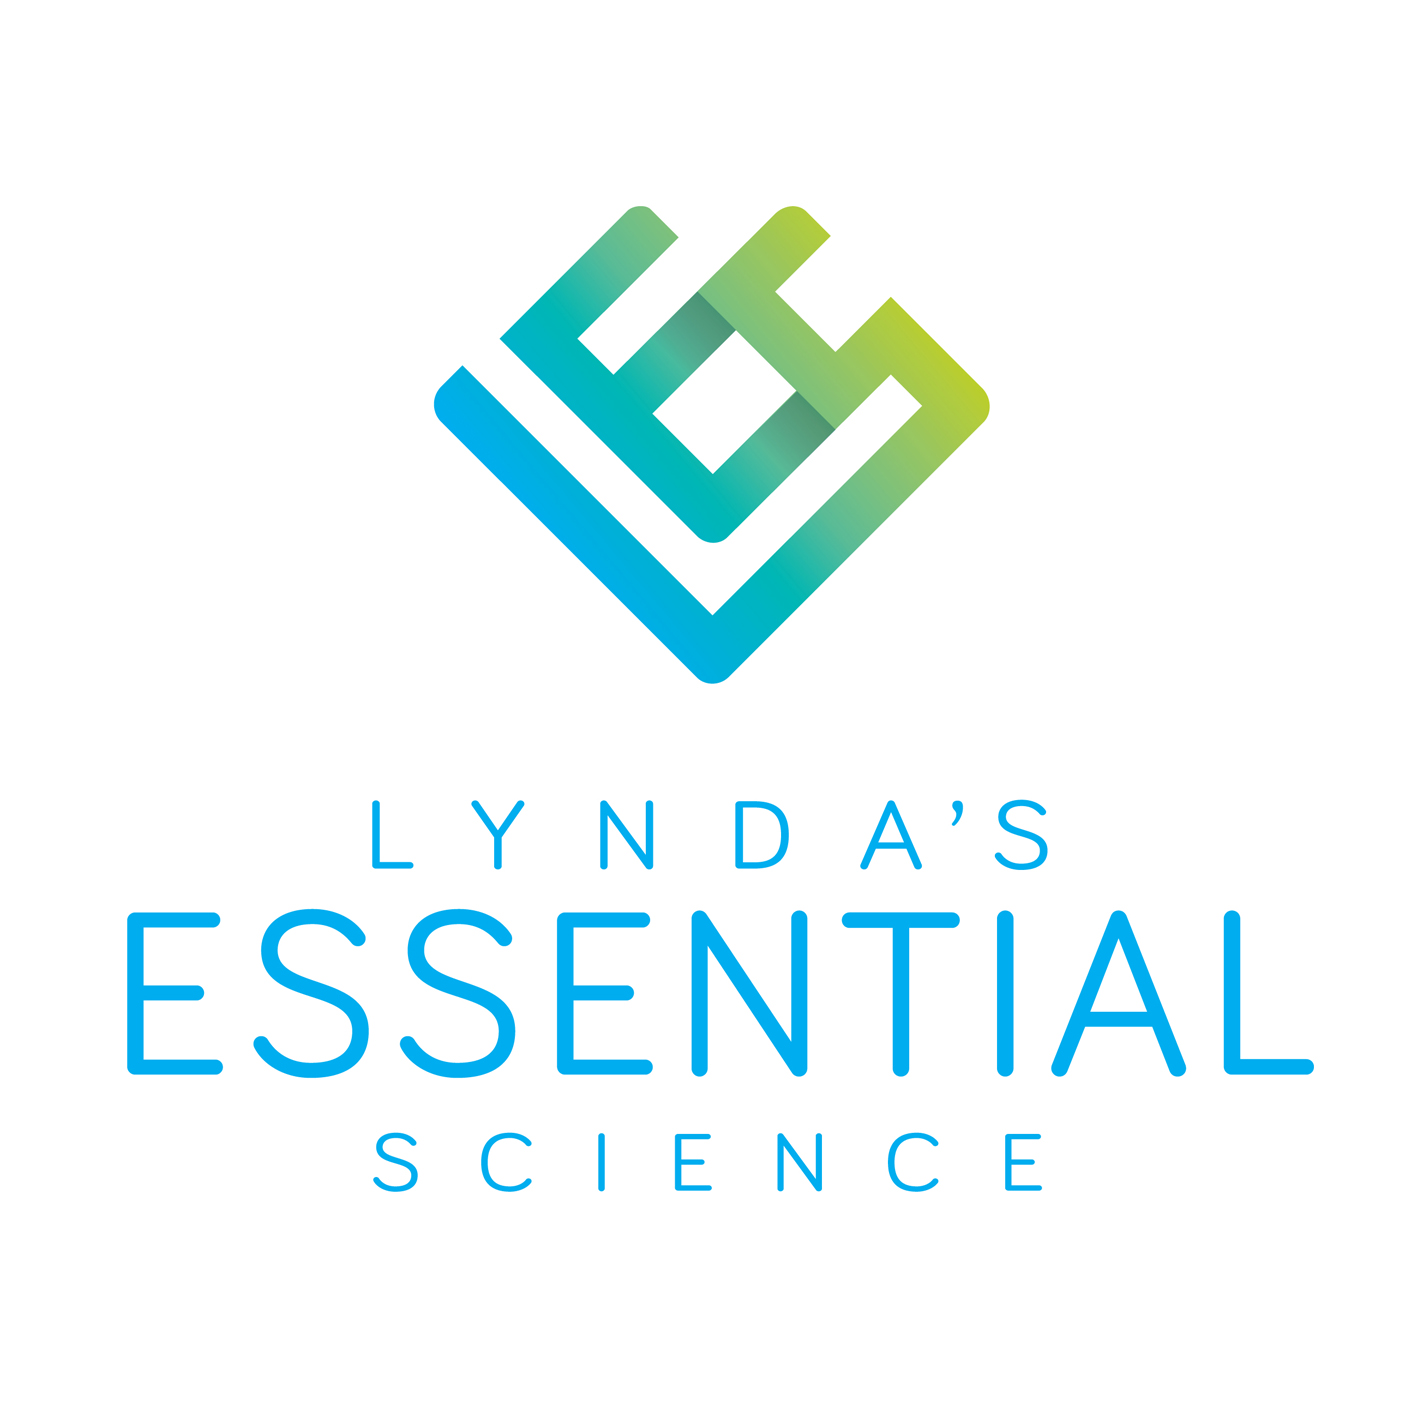 Lynda's Essential Science